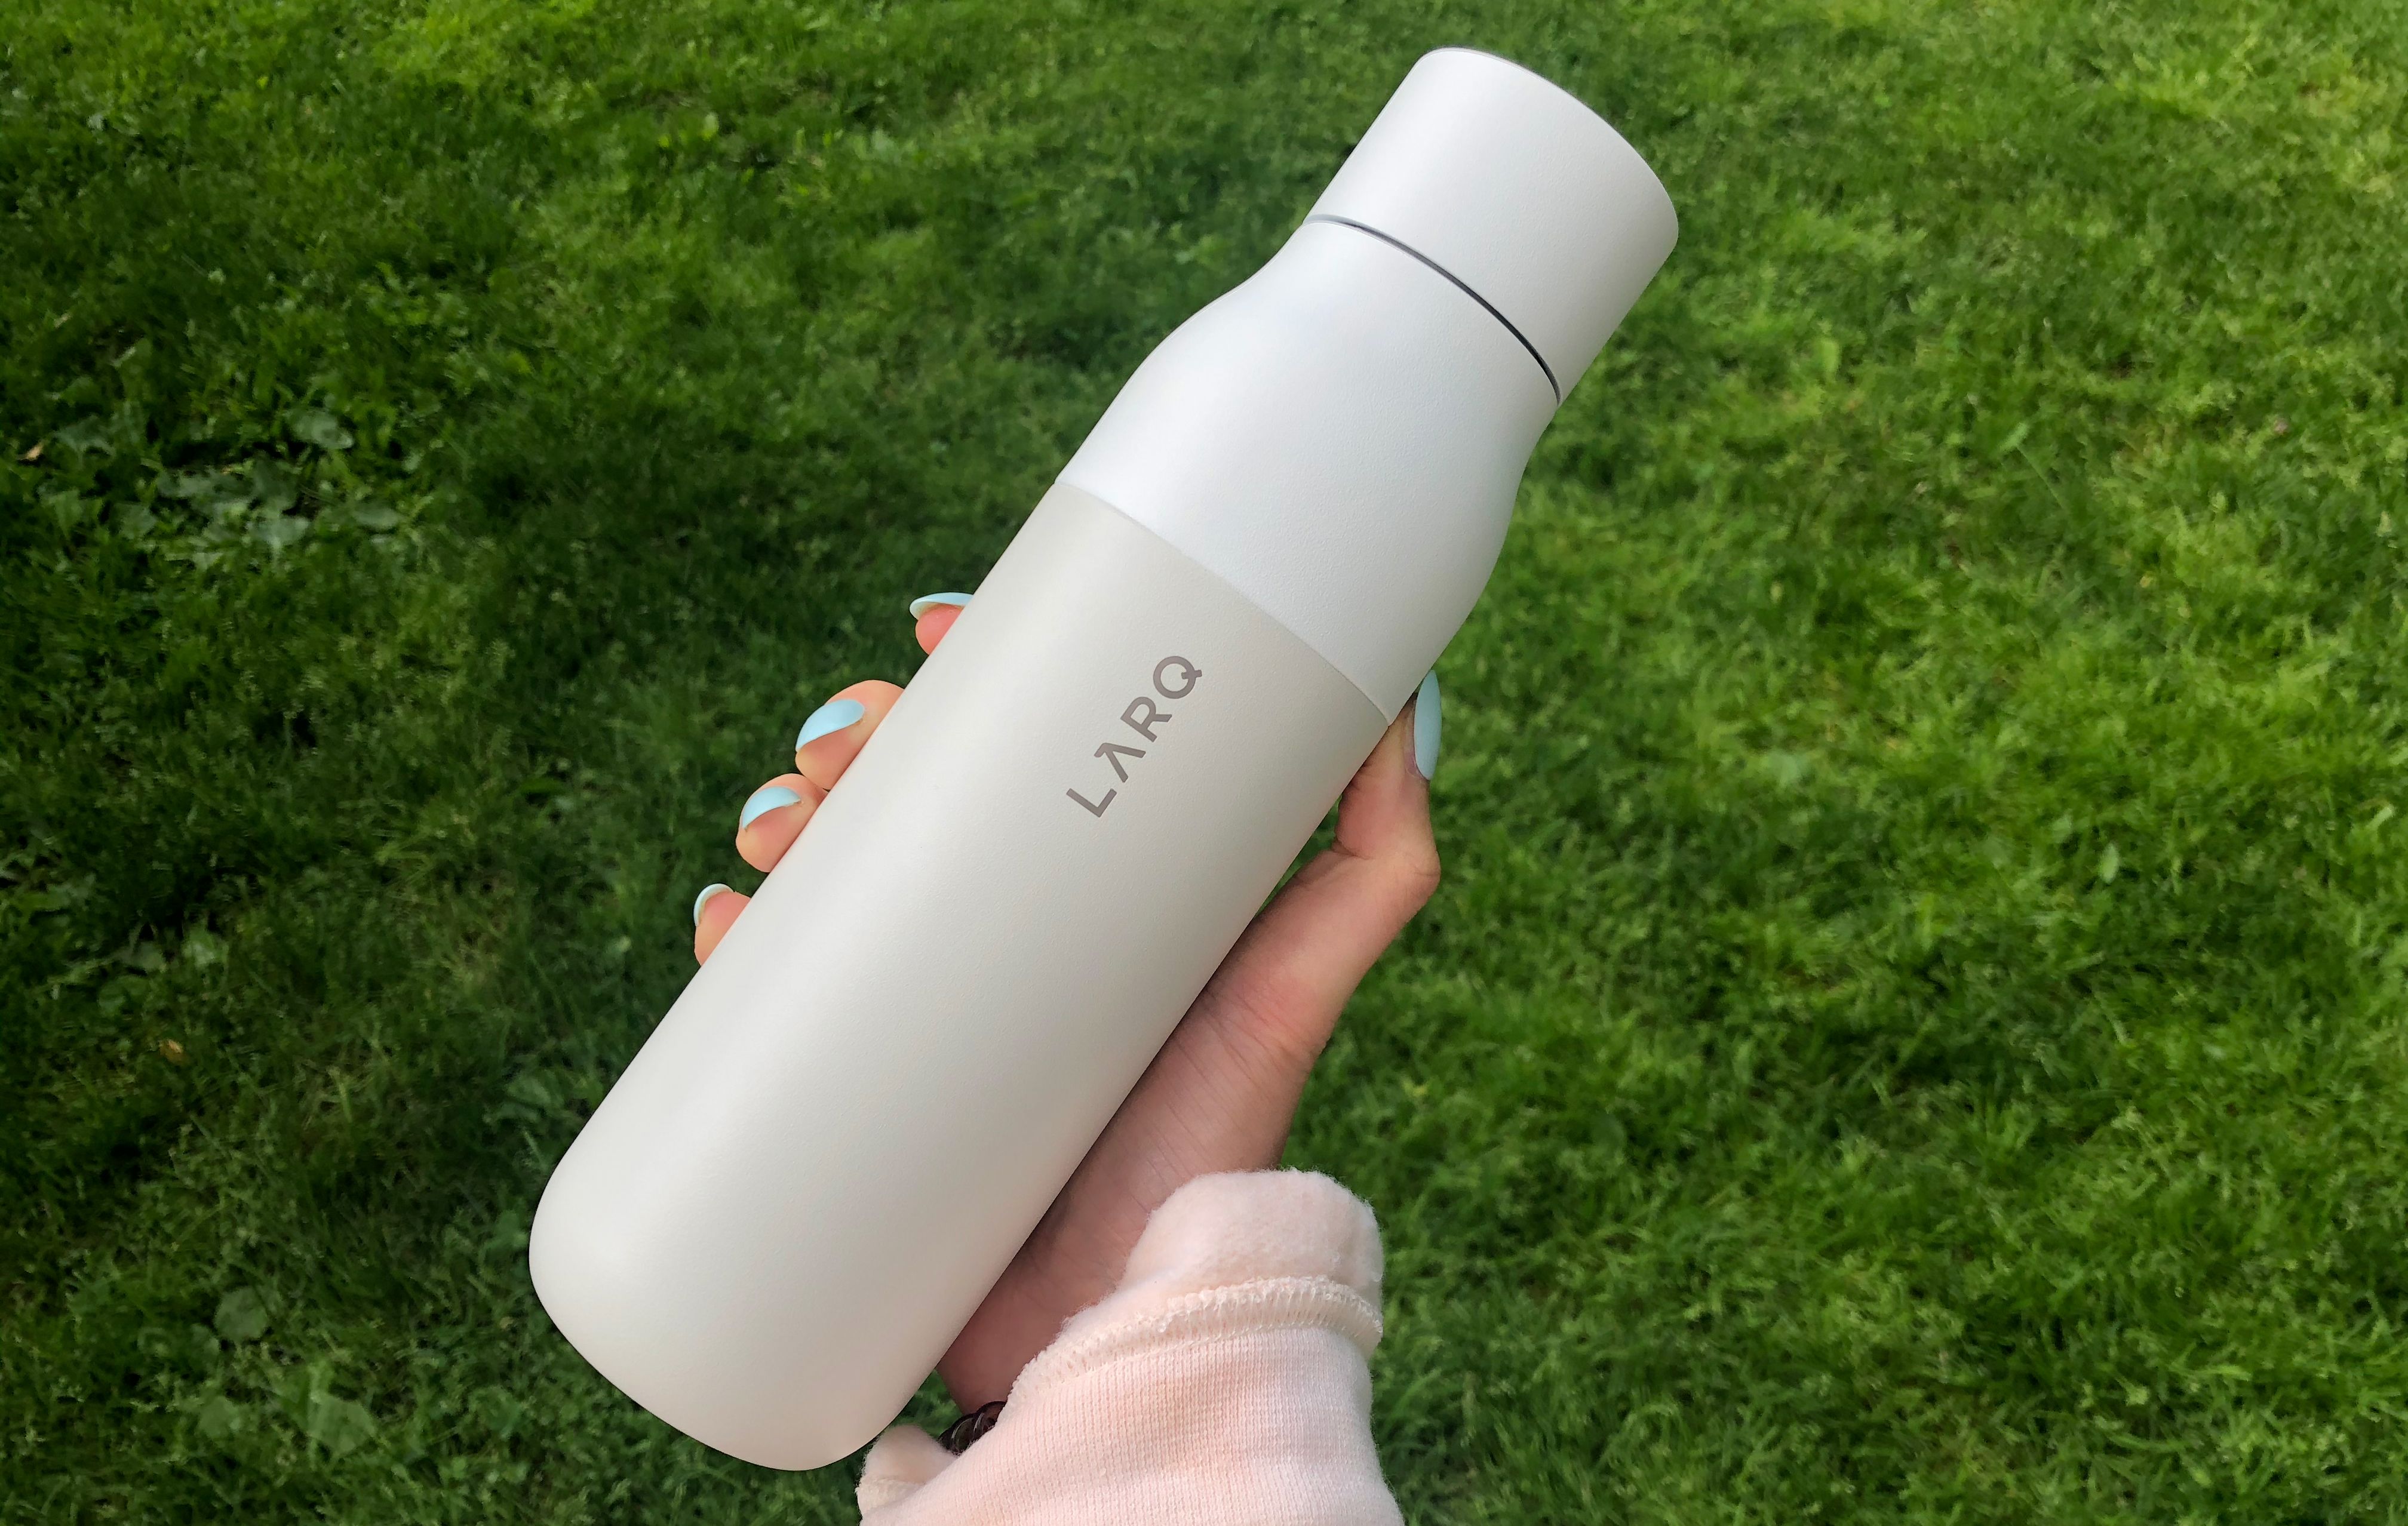 LARQ PureVis™ Self-Cleaning Water Bottle - 25 oz.